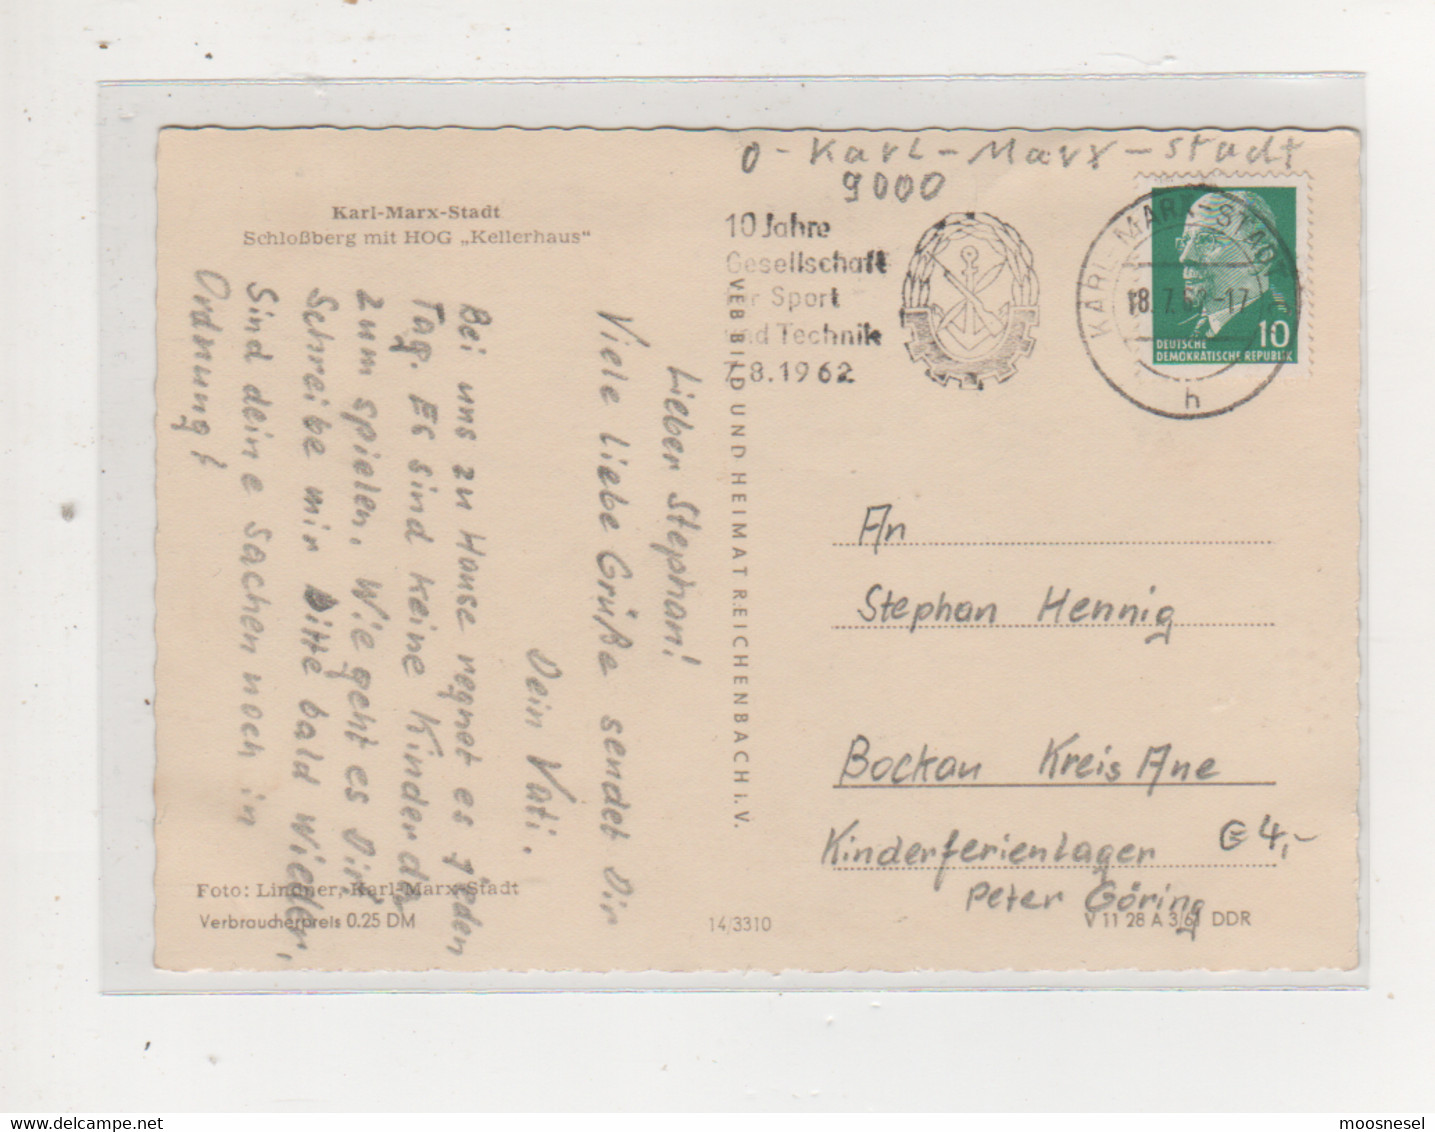 Antike Postkarte - KARL-MARX-STADT SCHLOSSBERG MIT HOG "KELLERHAUS" DDR 1961 - Chemnitz (Karl-Marx-Stadt 1953-1990)